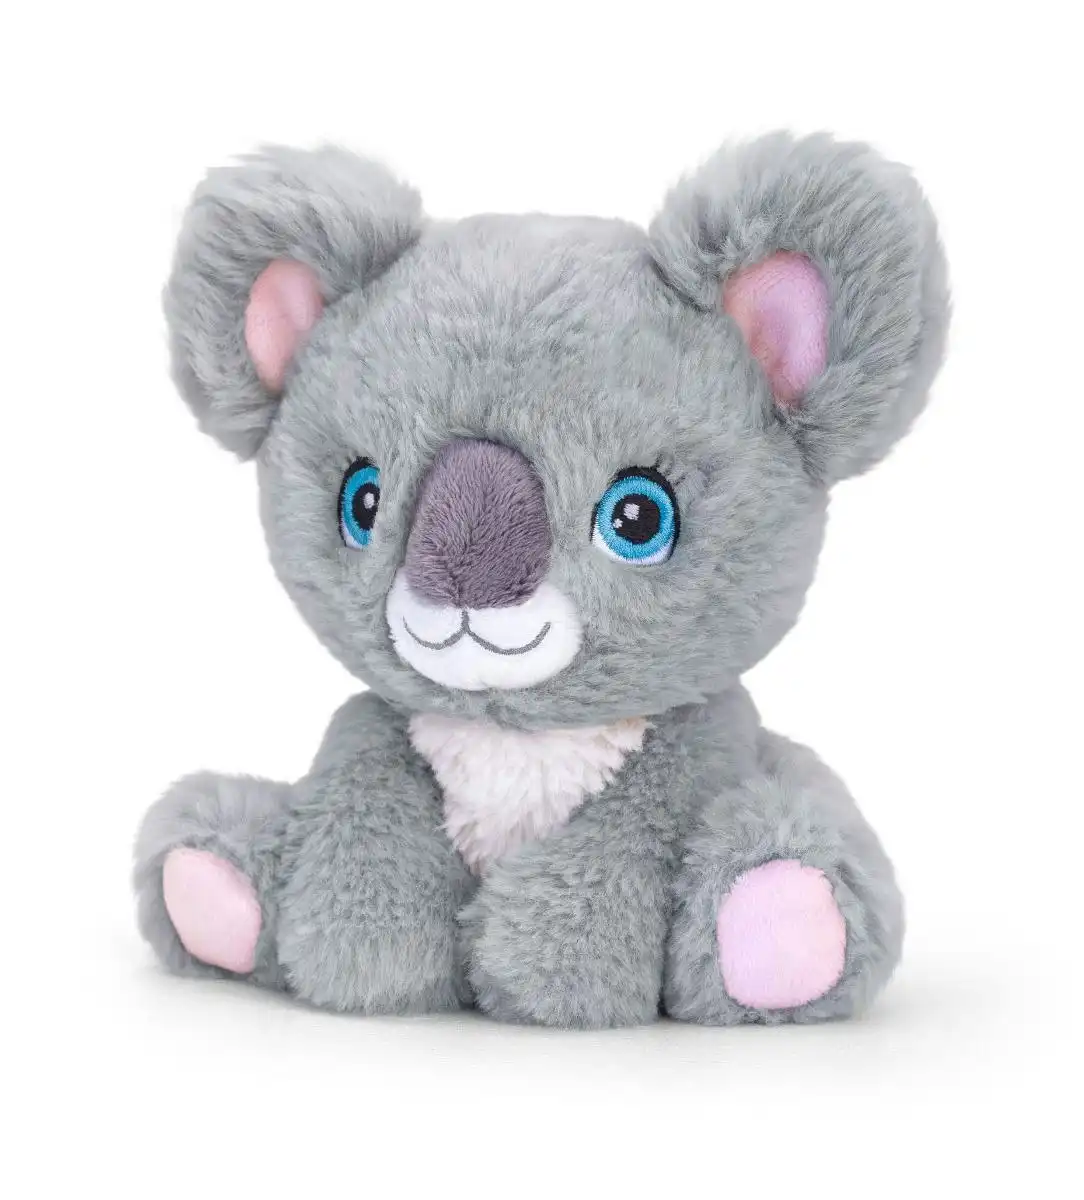 Adoptable World - Plush Koala by Keeleco 16cm